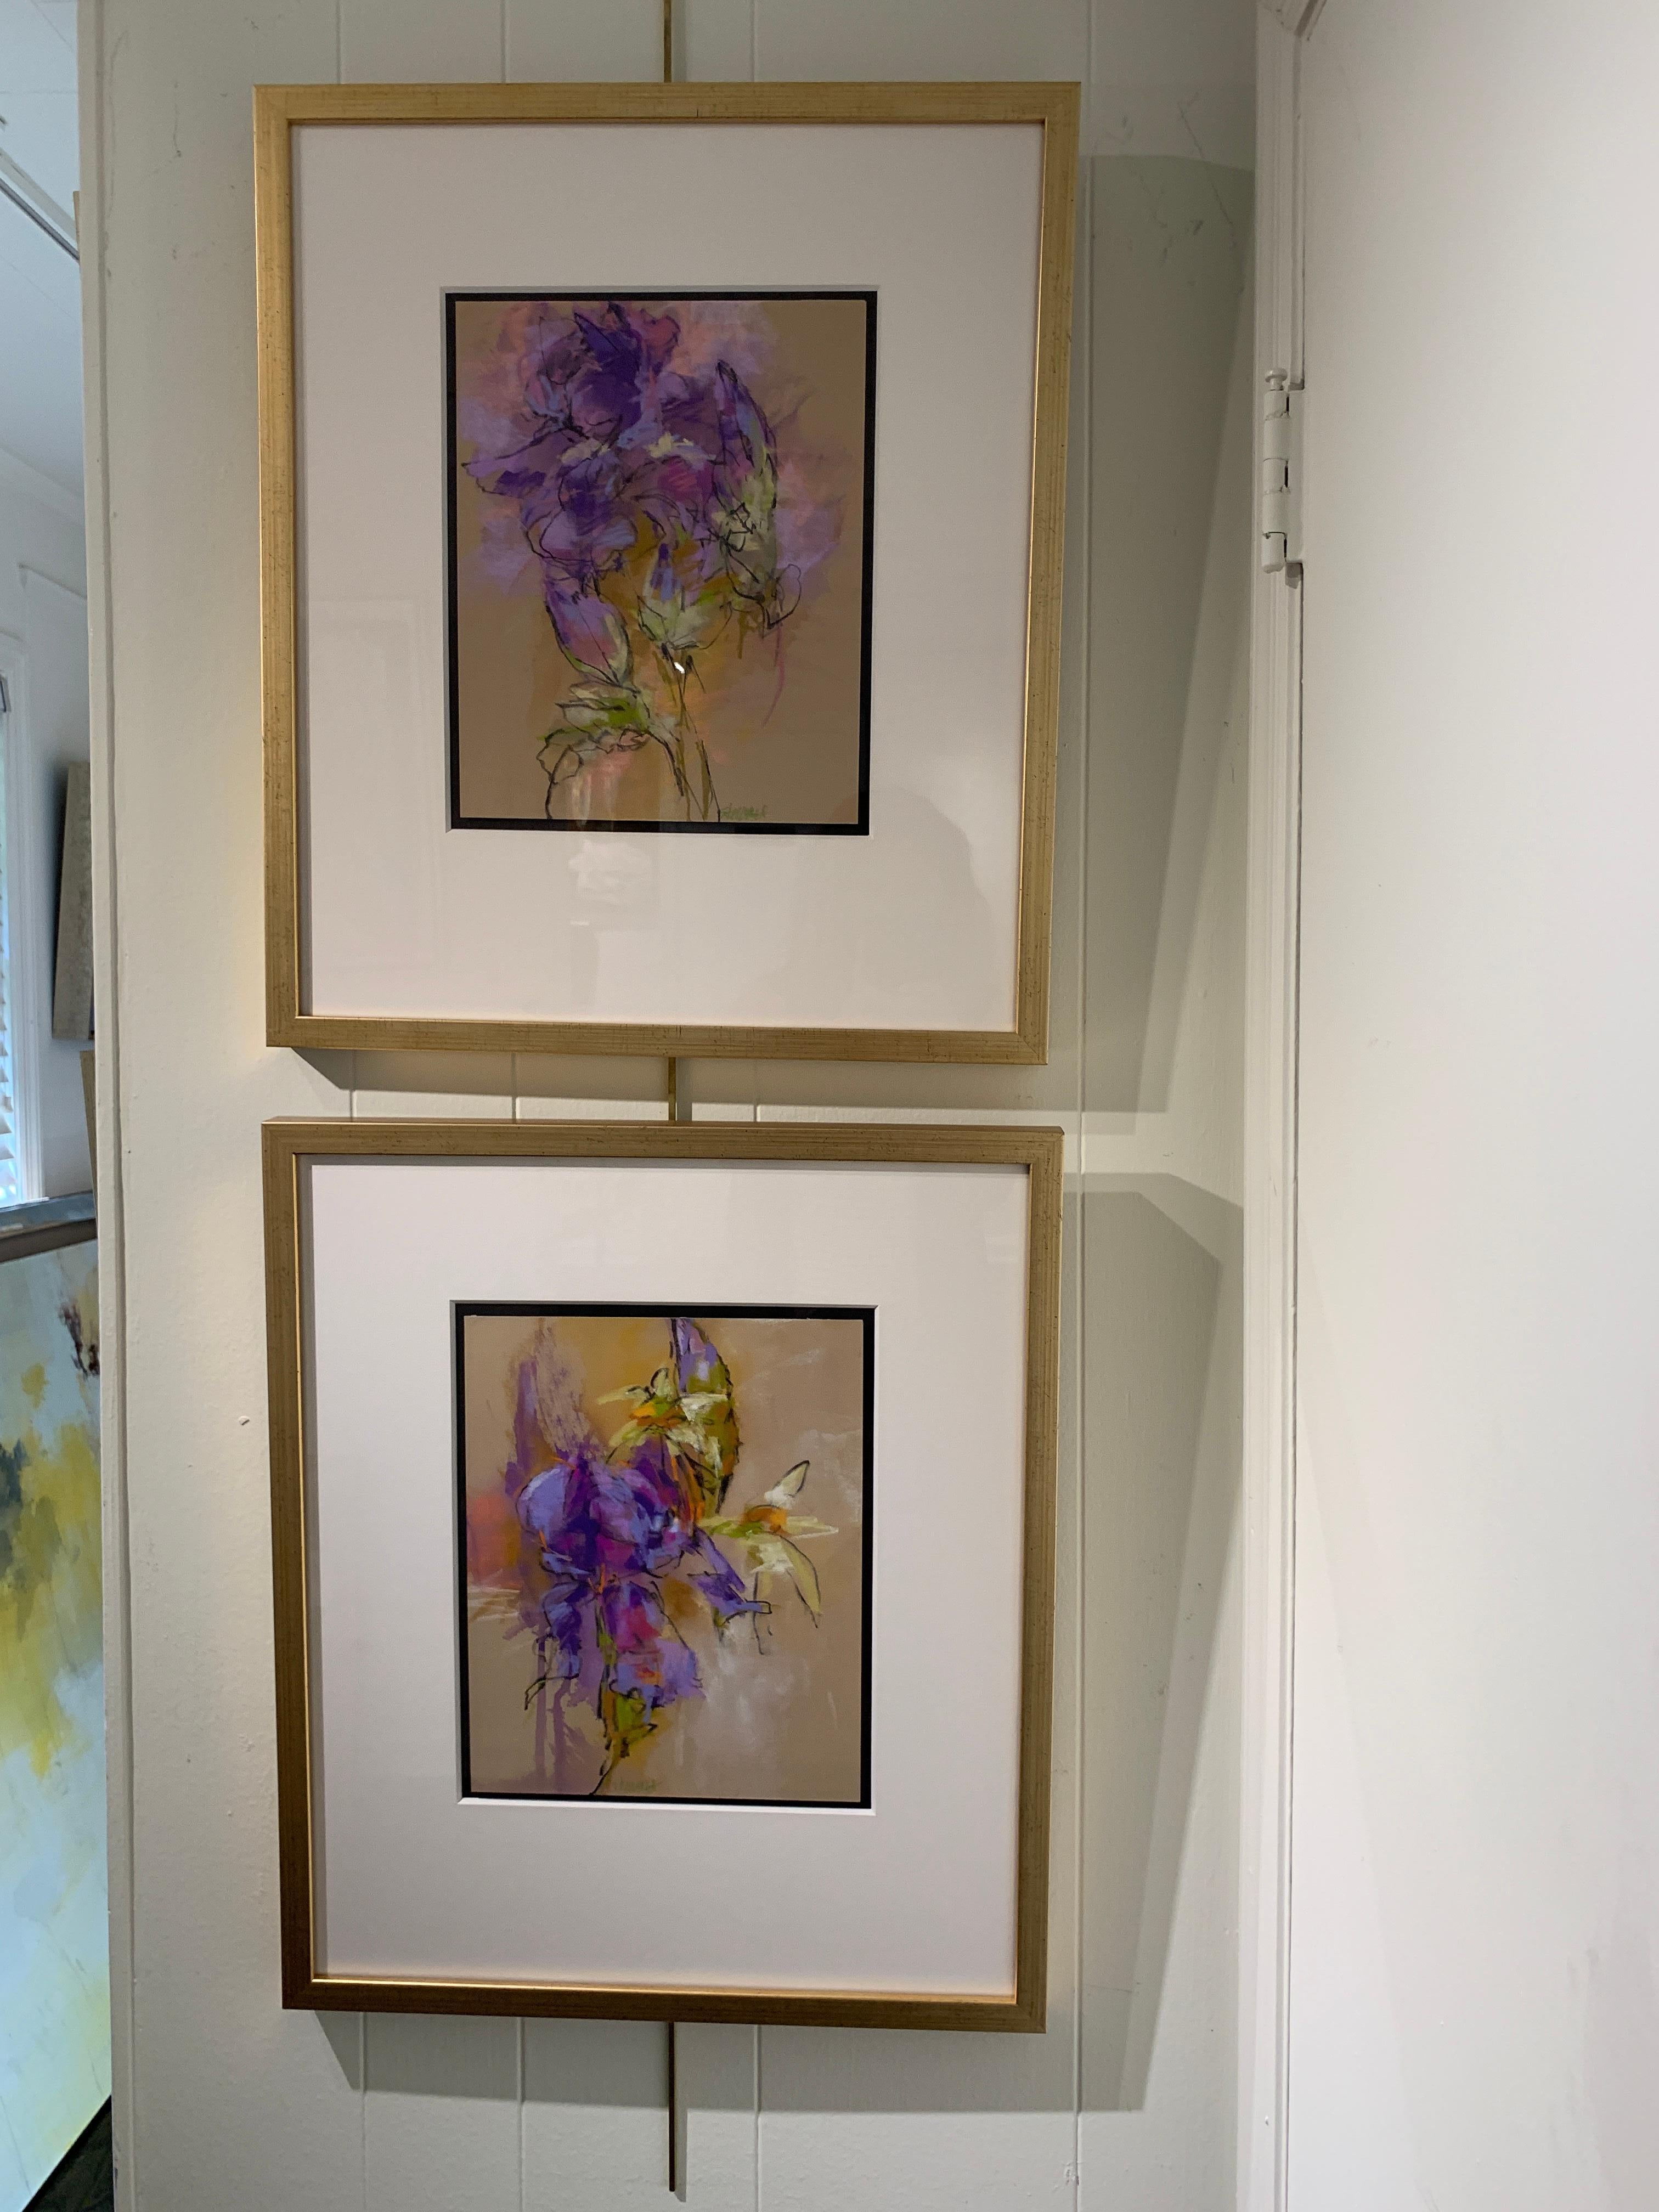 Monet's Irises I by Debora Stewart, Framed Pastel and Mixed Media Work on Paper 1